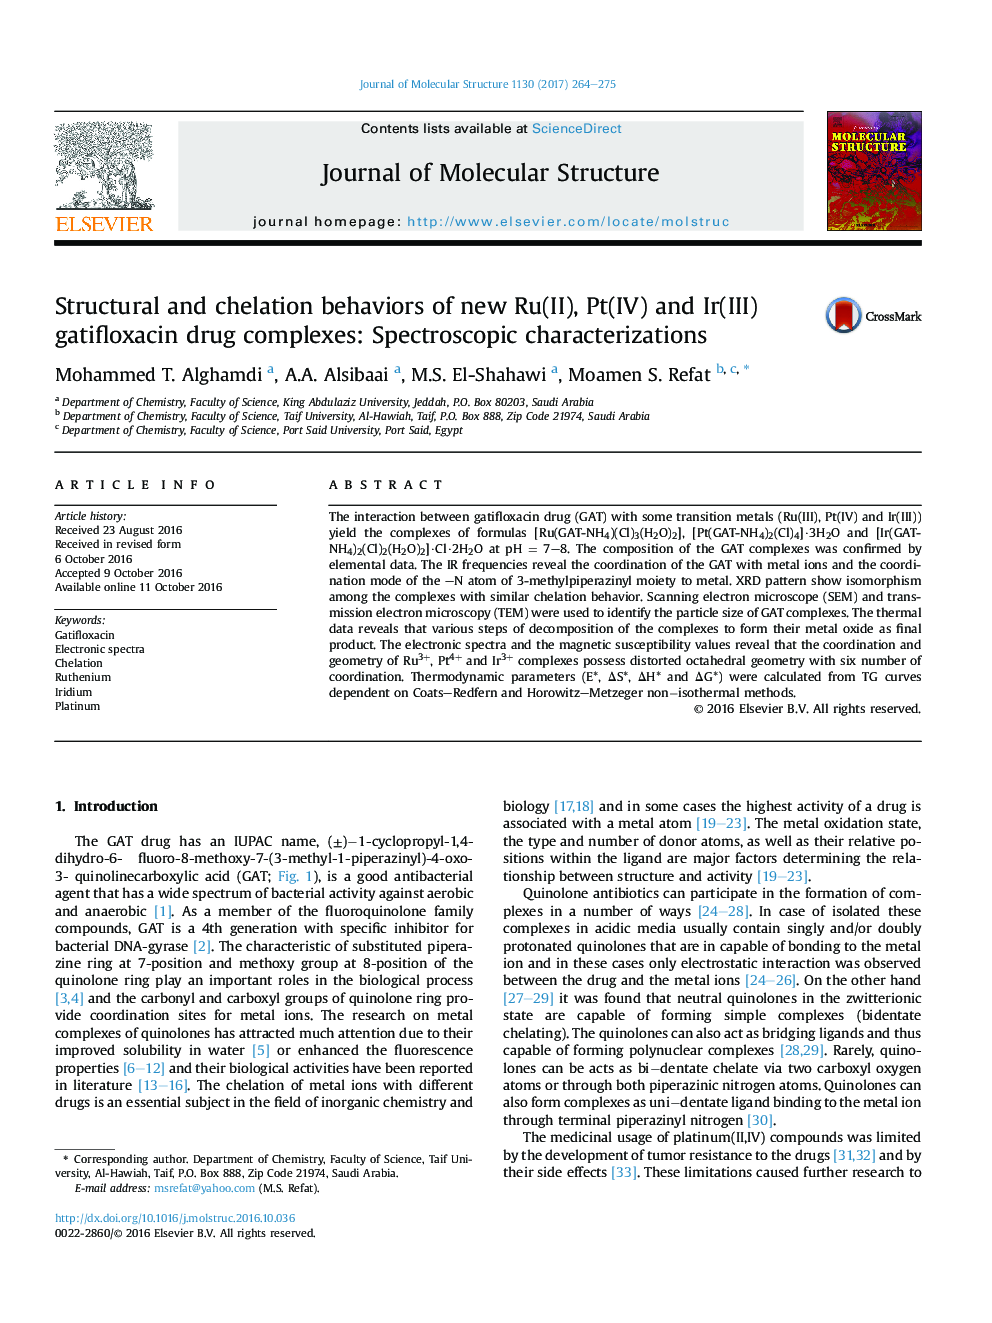 Structural and chelation behaviors of new Ru(II), Pt(IV) and Ir(III) gatifloxacin drug complexes: Spectroscopic characterizations